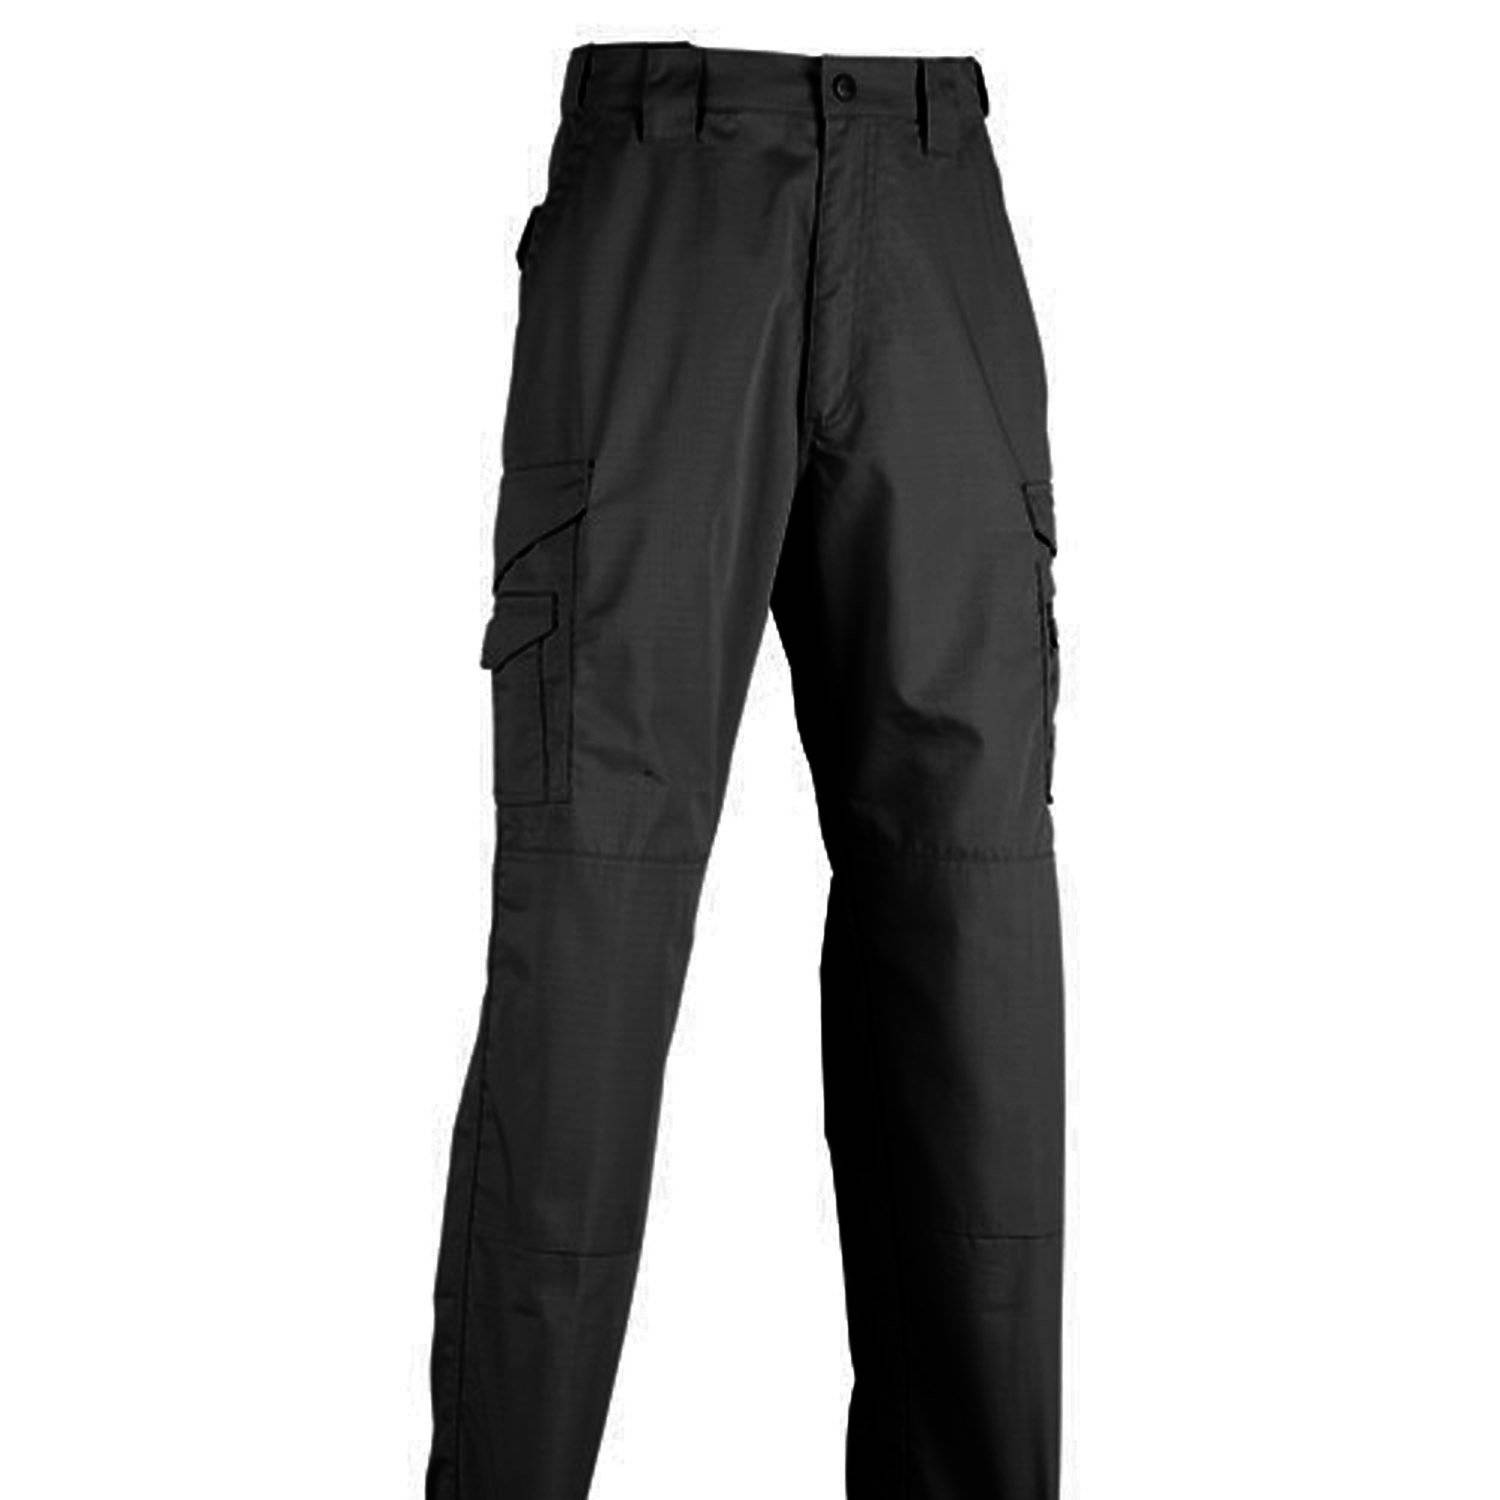 TRU-SPEC 1061005 24-7 Poly Cotton Ripstop Trousers Dark Navy W34 L32 for sale online 